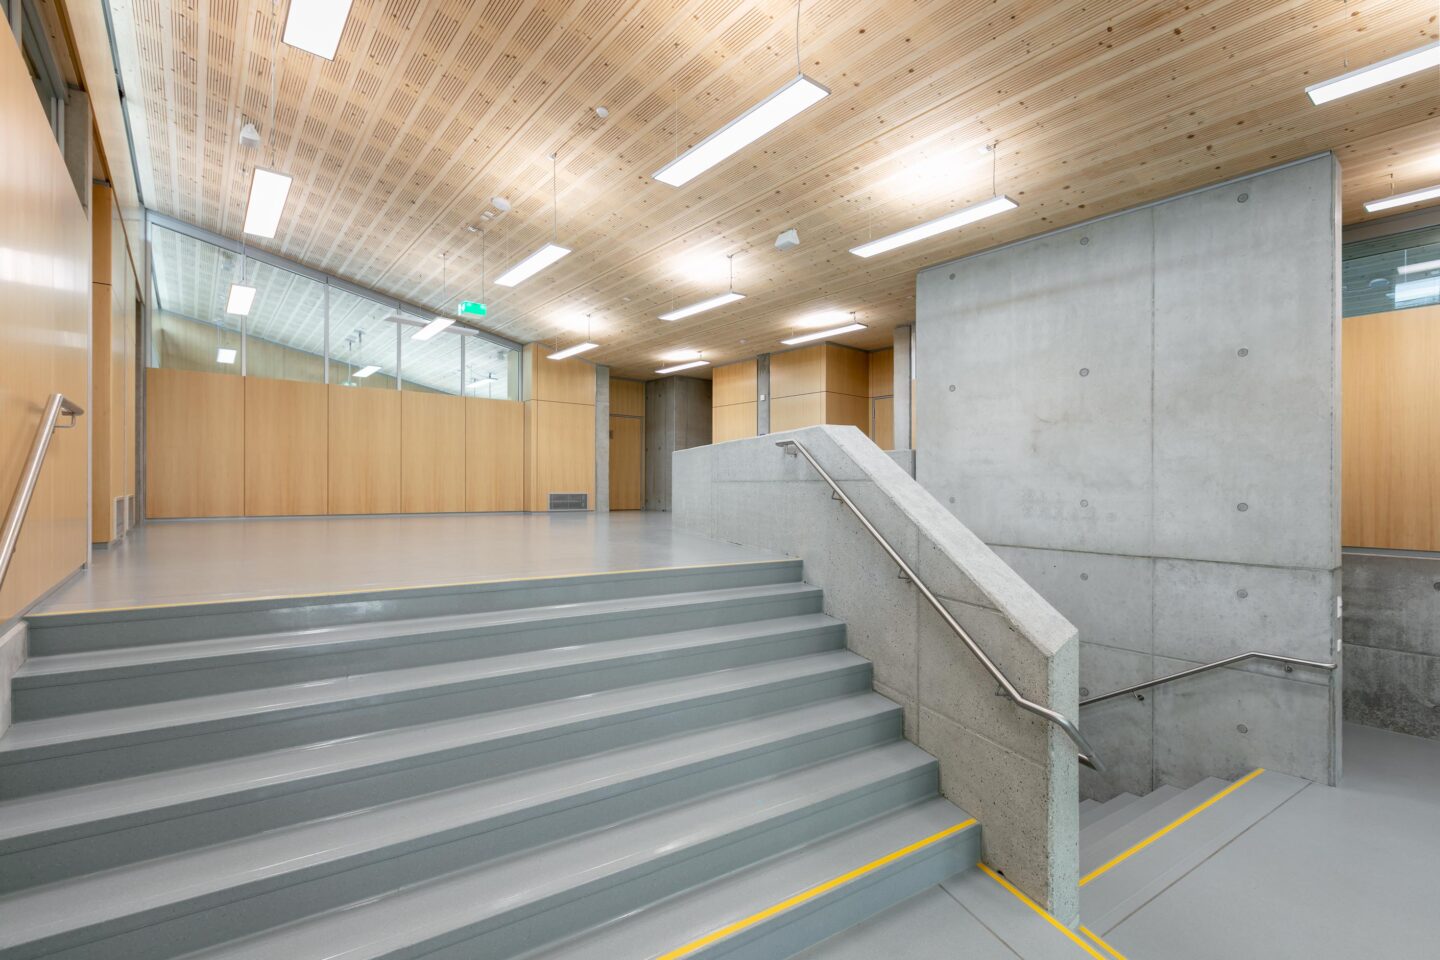 Schubart-Gymnasium Aalen │ system walls from feco │ wood doors elements